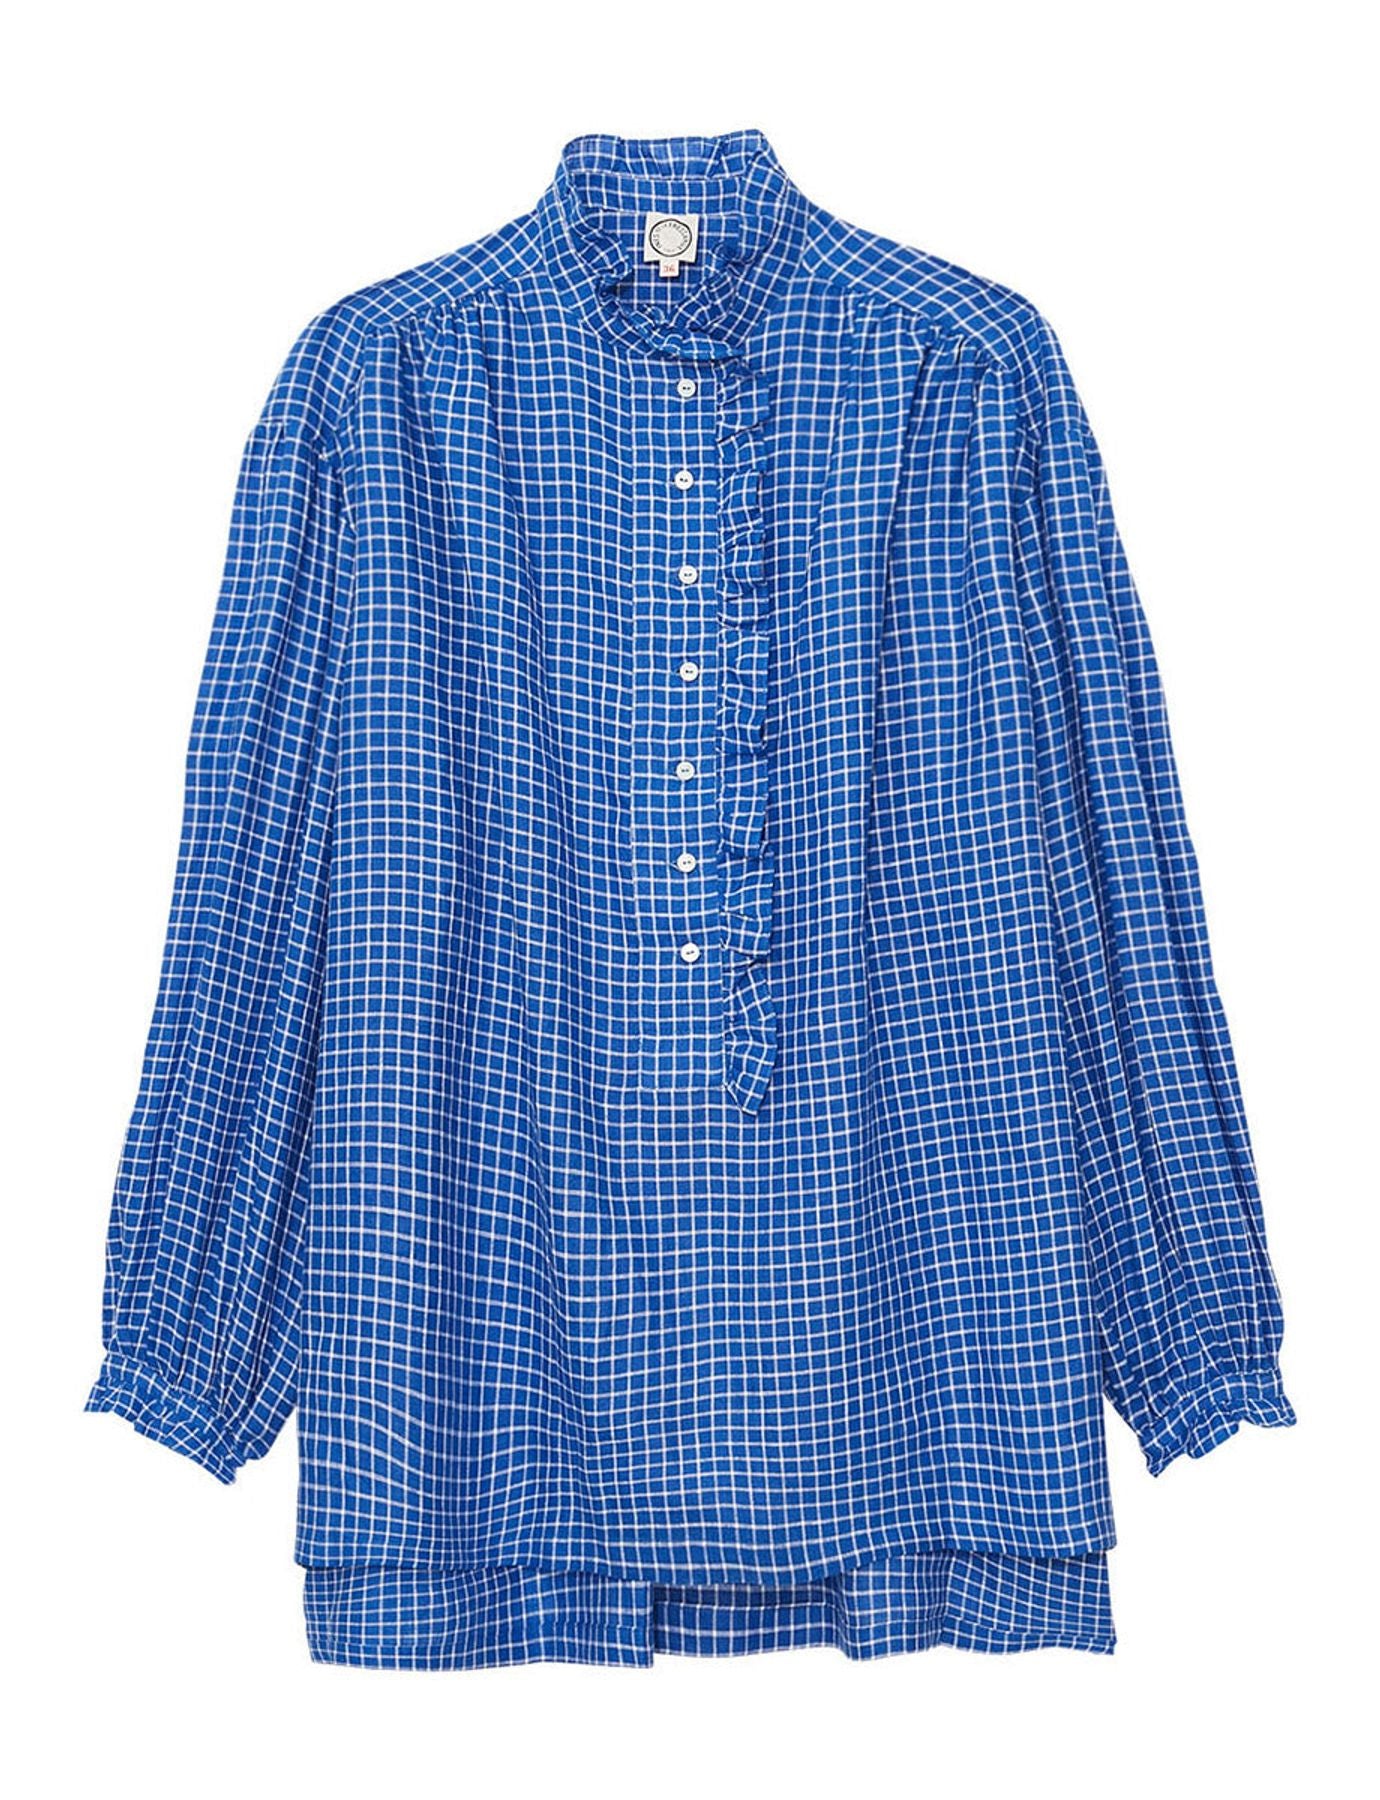 shirt-maryange-oversize-a-flyer-in-blue-linen